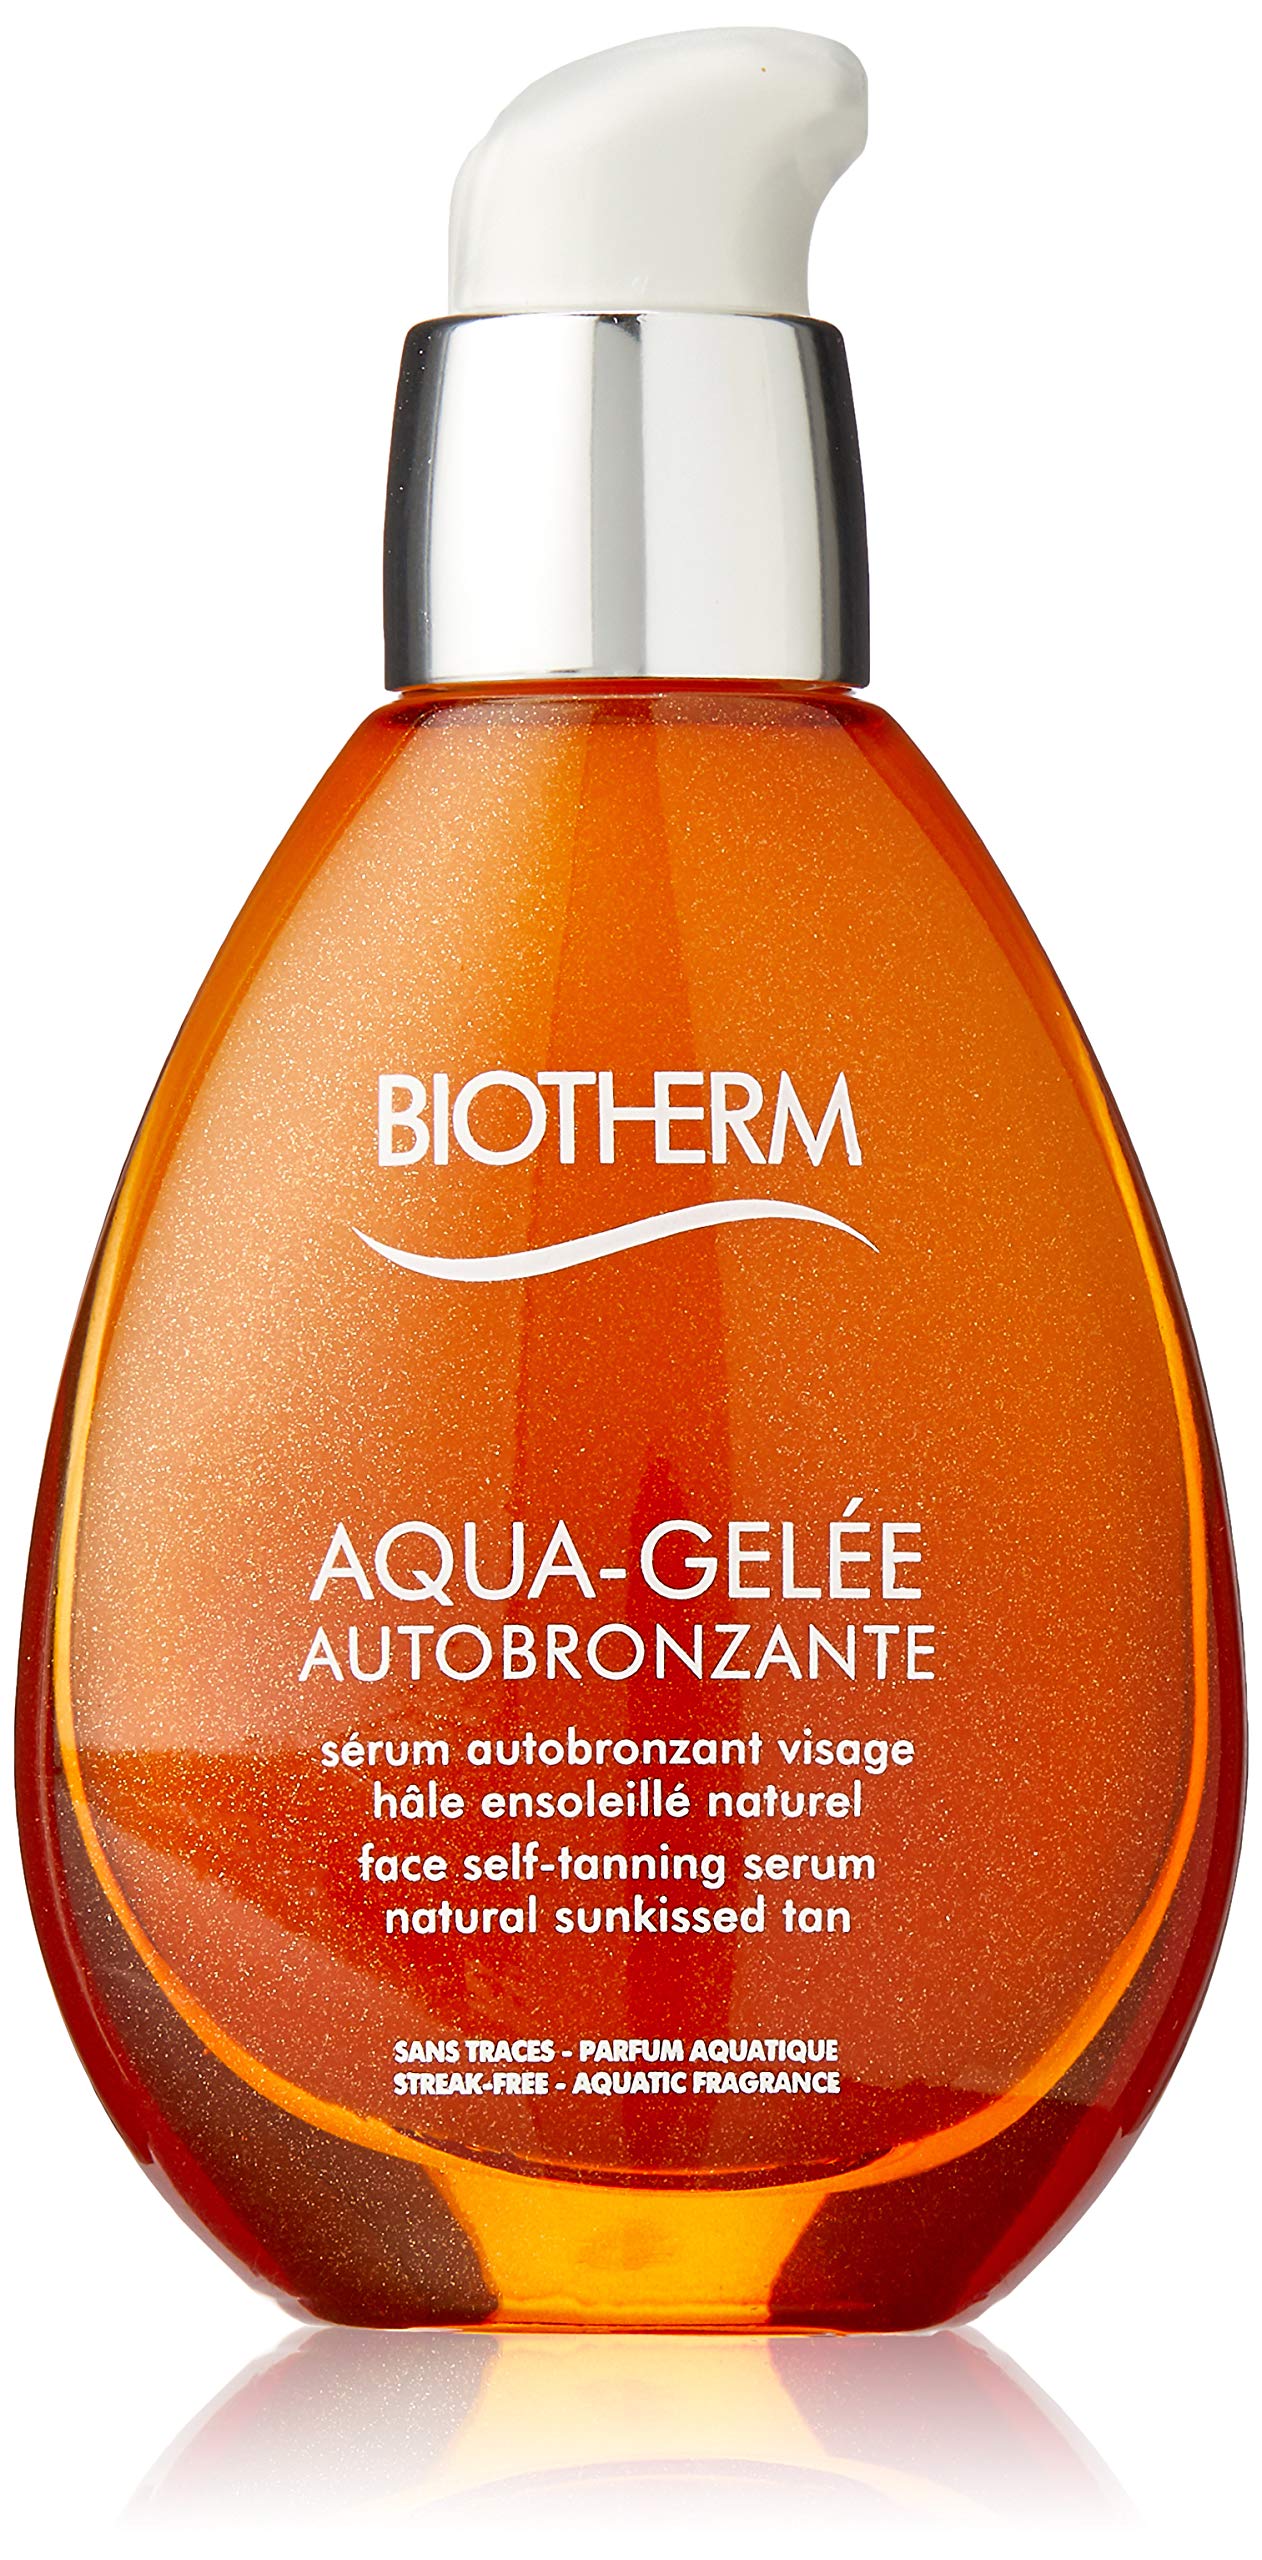 Biotherm Aqua Gelee Autobronzante Face Self Tanning Serum 169 Ounce